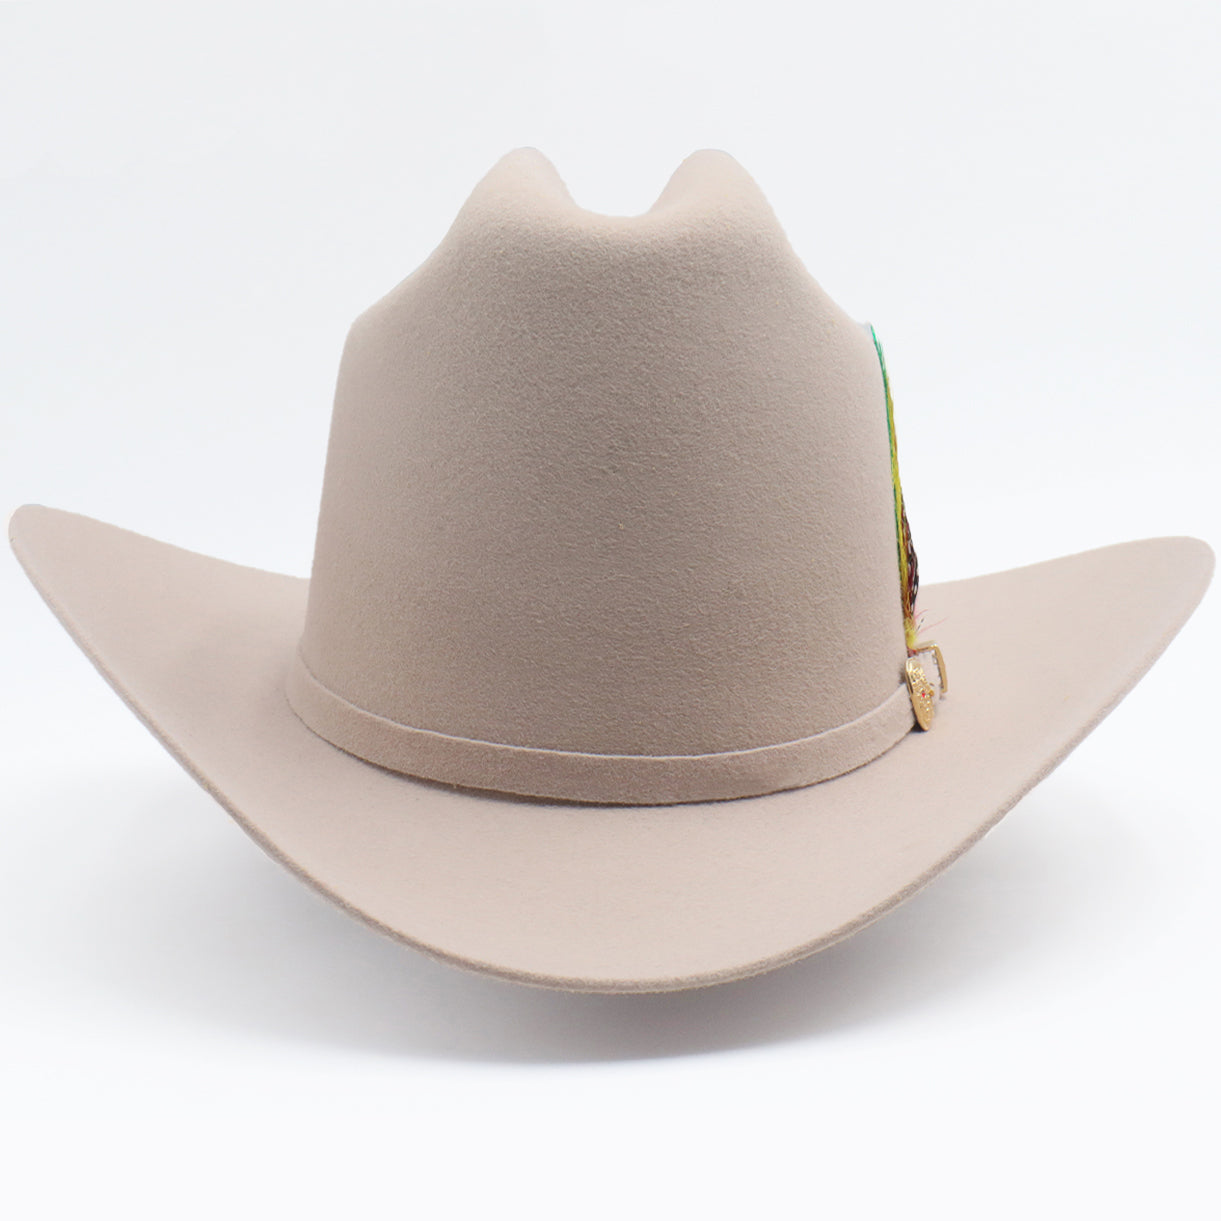 silver belly cowboy hat
